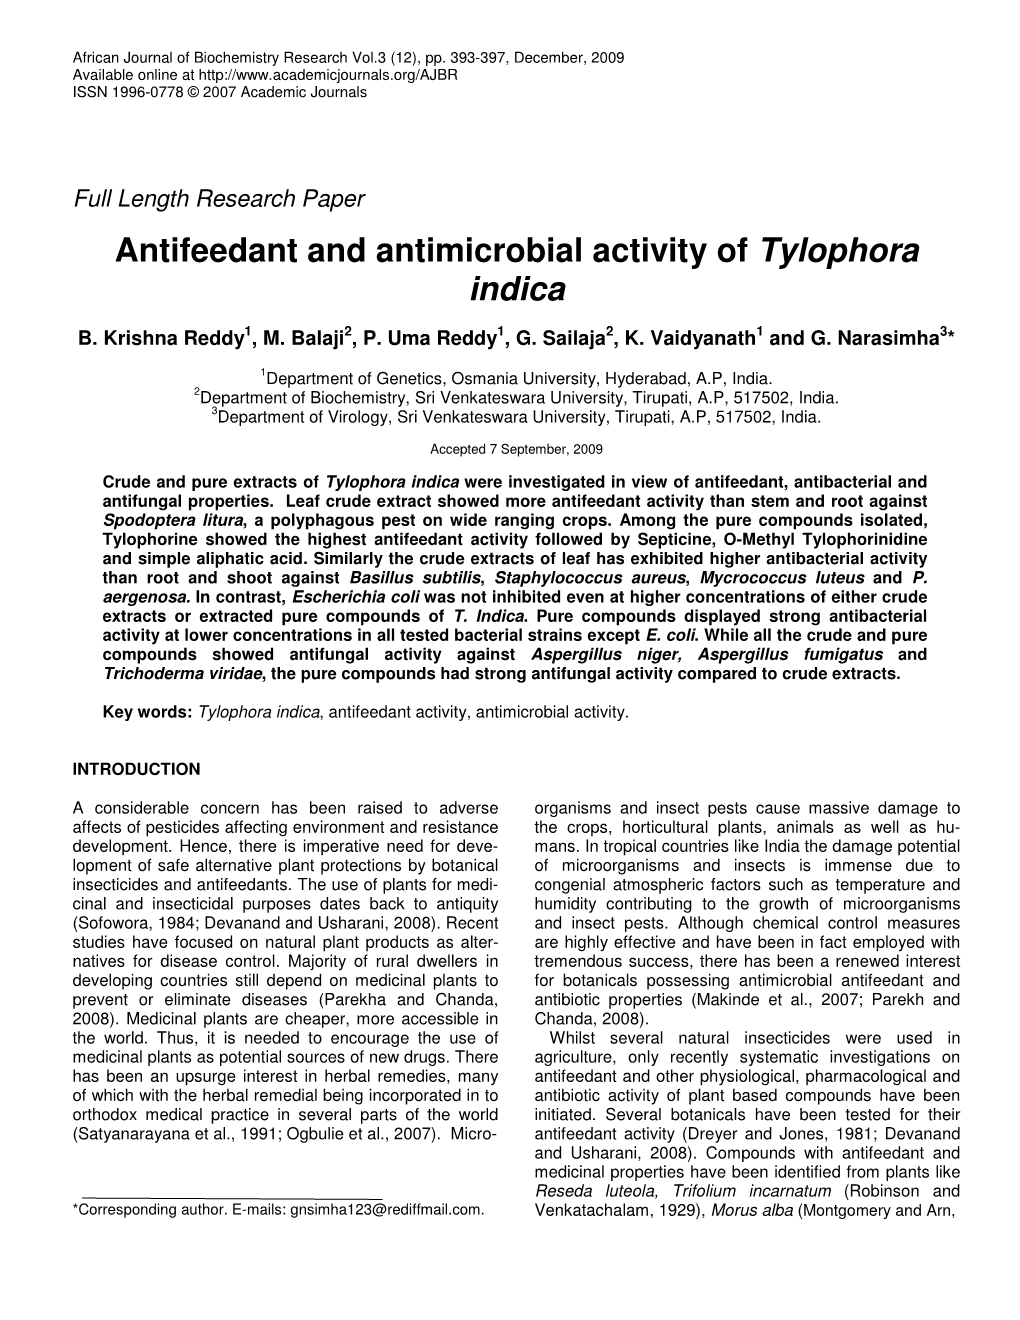 Antifeedant and Antimicrobial Activity of Tylophora Indica